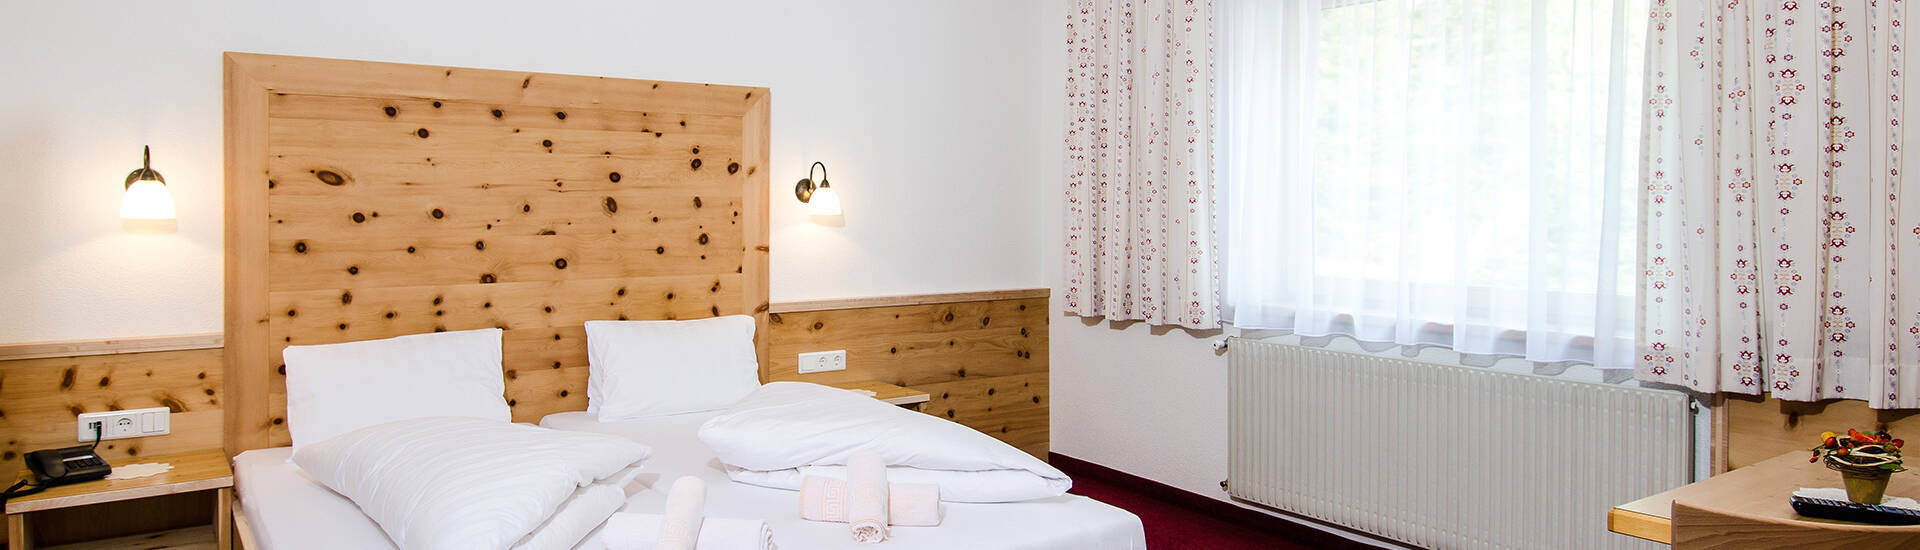  Rooms at the Hotel Sonnenhof in Ischgl/Mathon